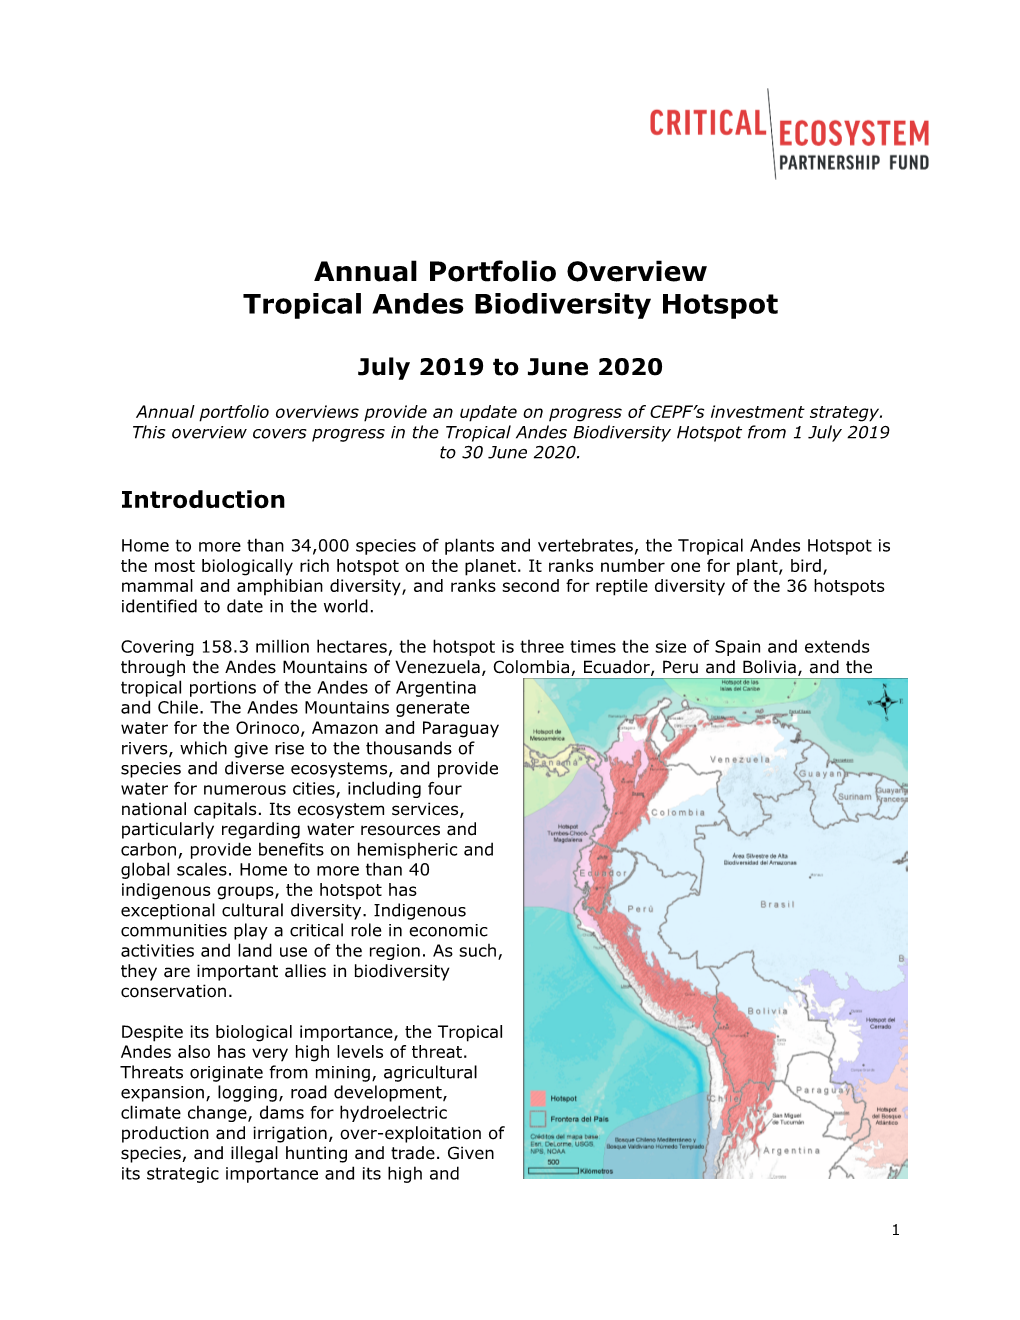 Annual Portfolio Overview Tropical Andes Biodiversity Hotspot